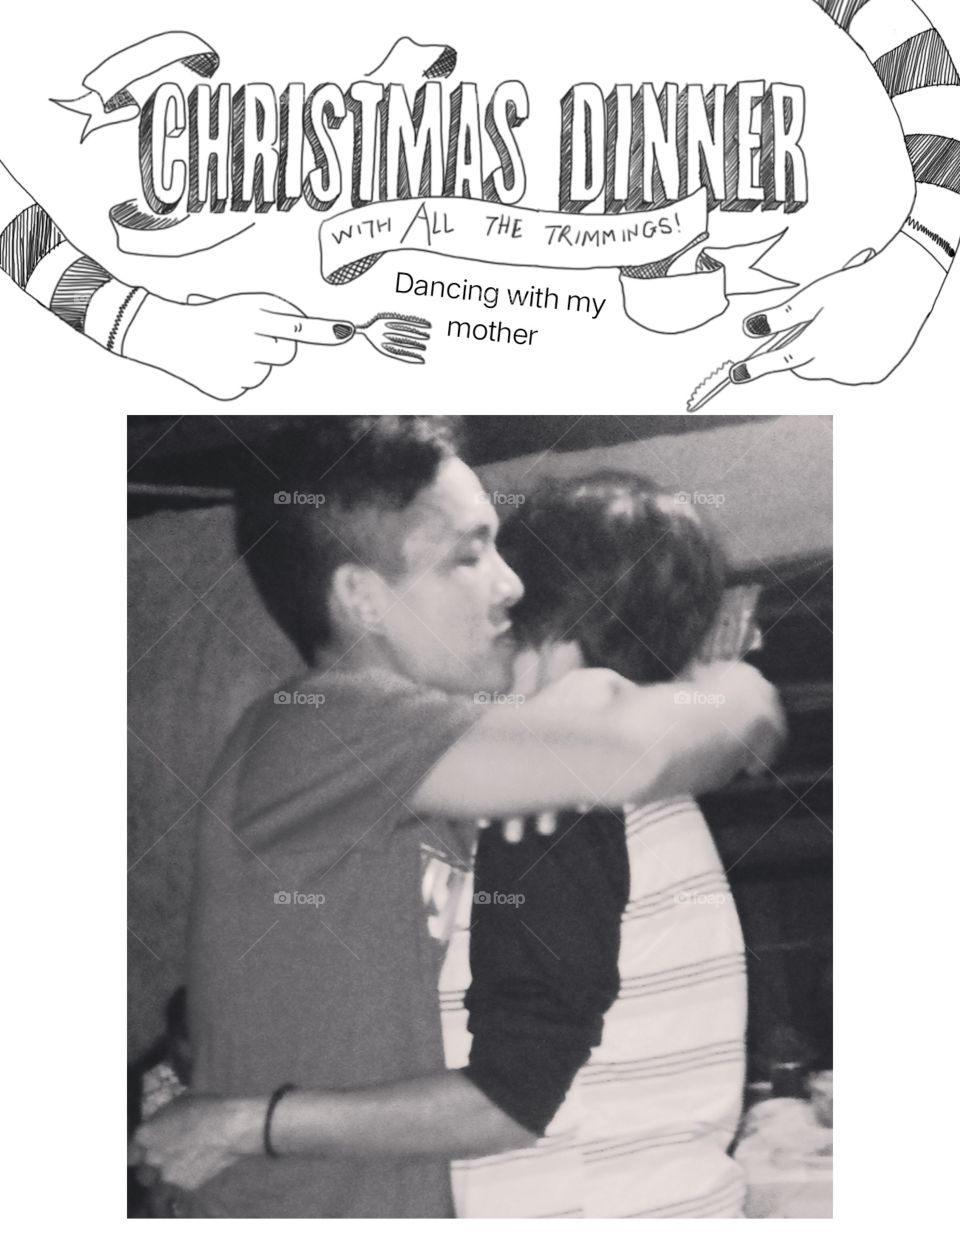 Mother&Son Dacing >CHRISTMAS DINNER